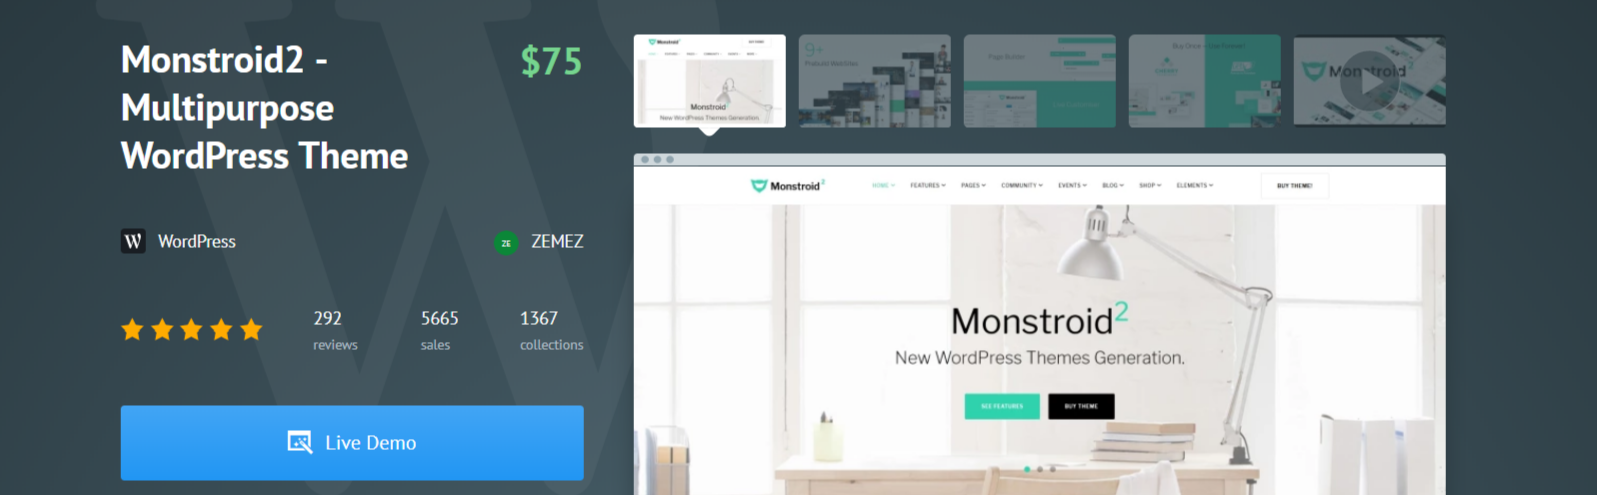 Monstroid2 Multipurpose - WordPress Business Themes